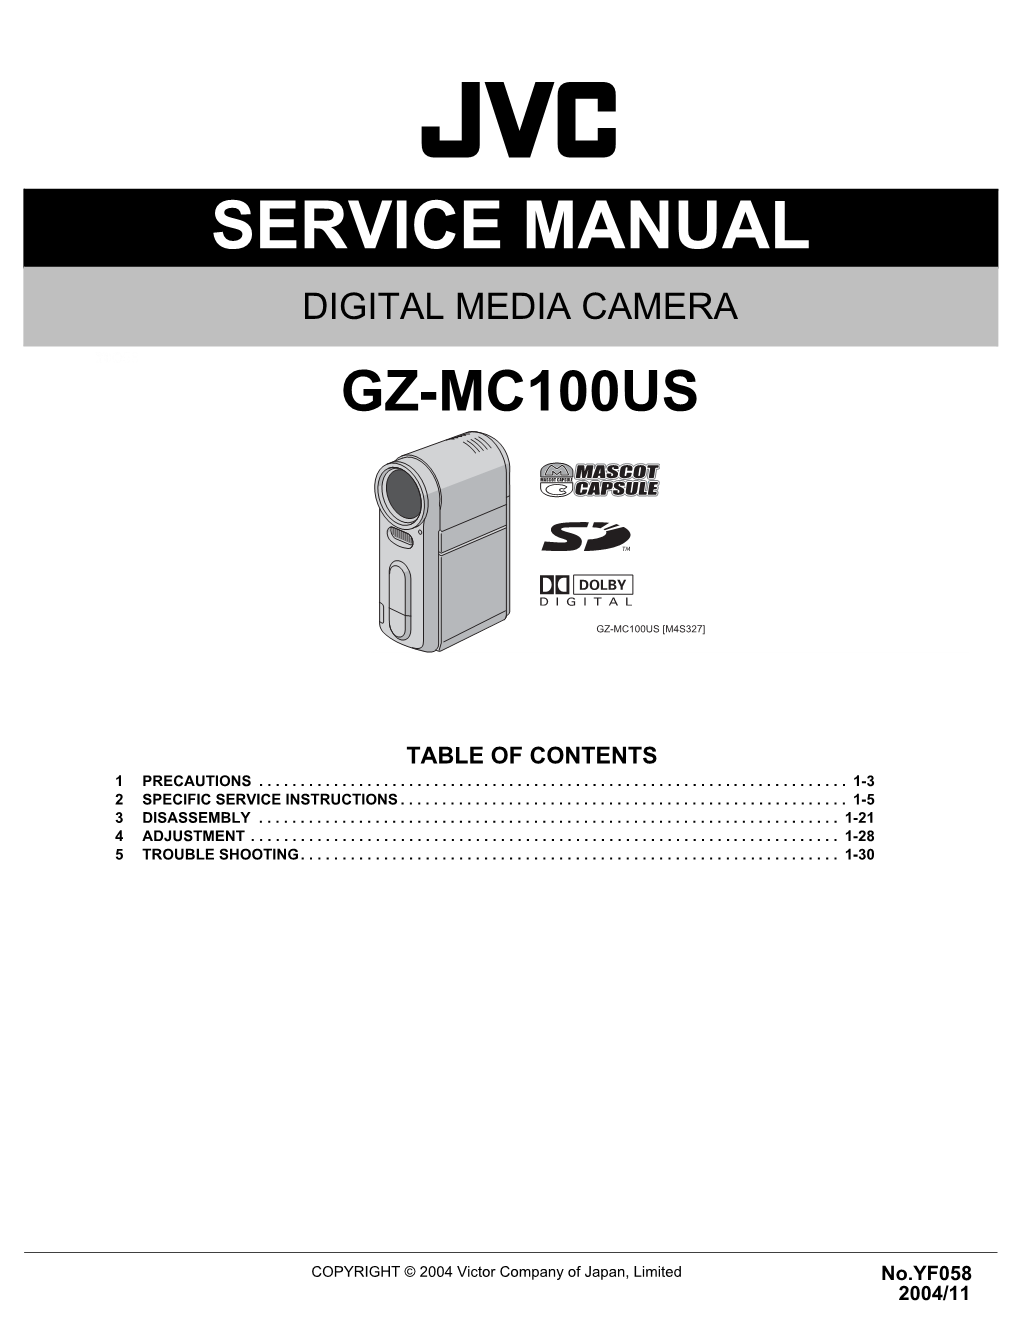 Service Manual Digital Media Camera